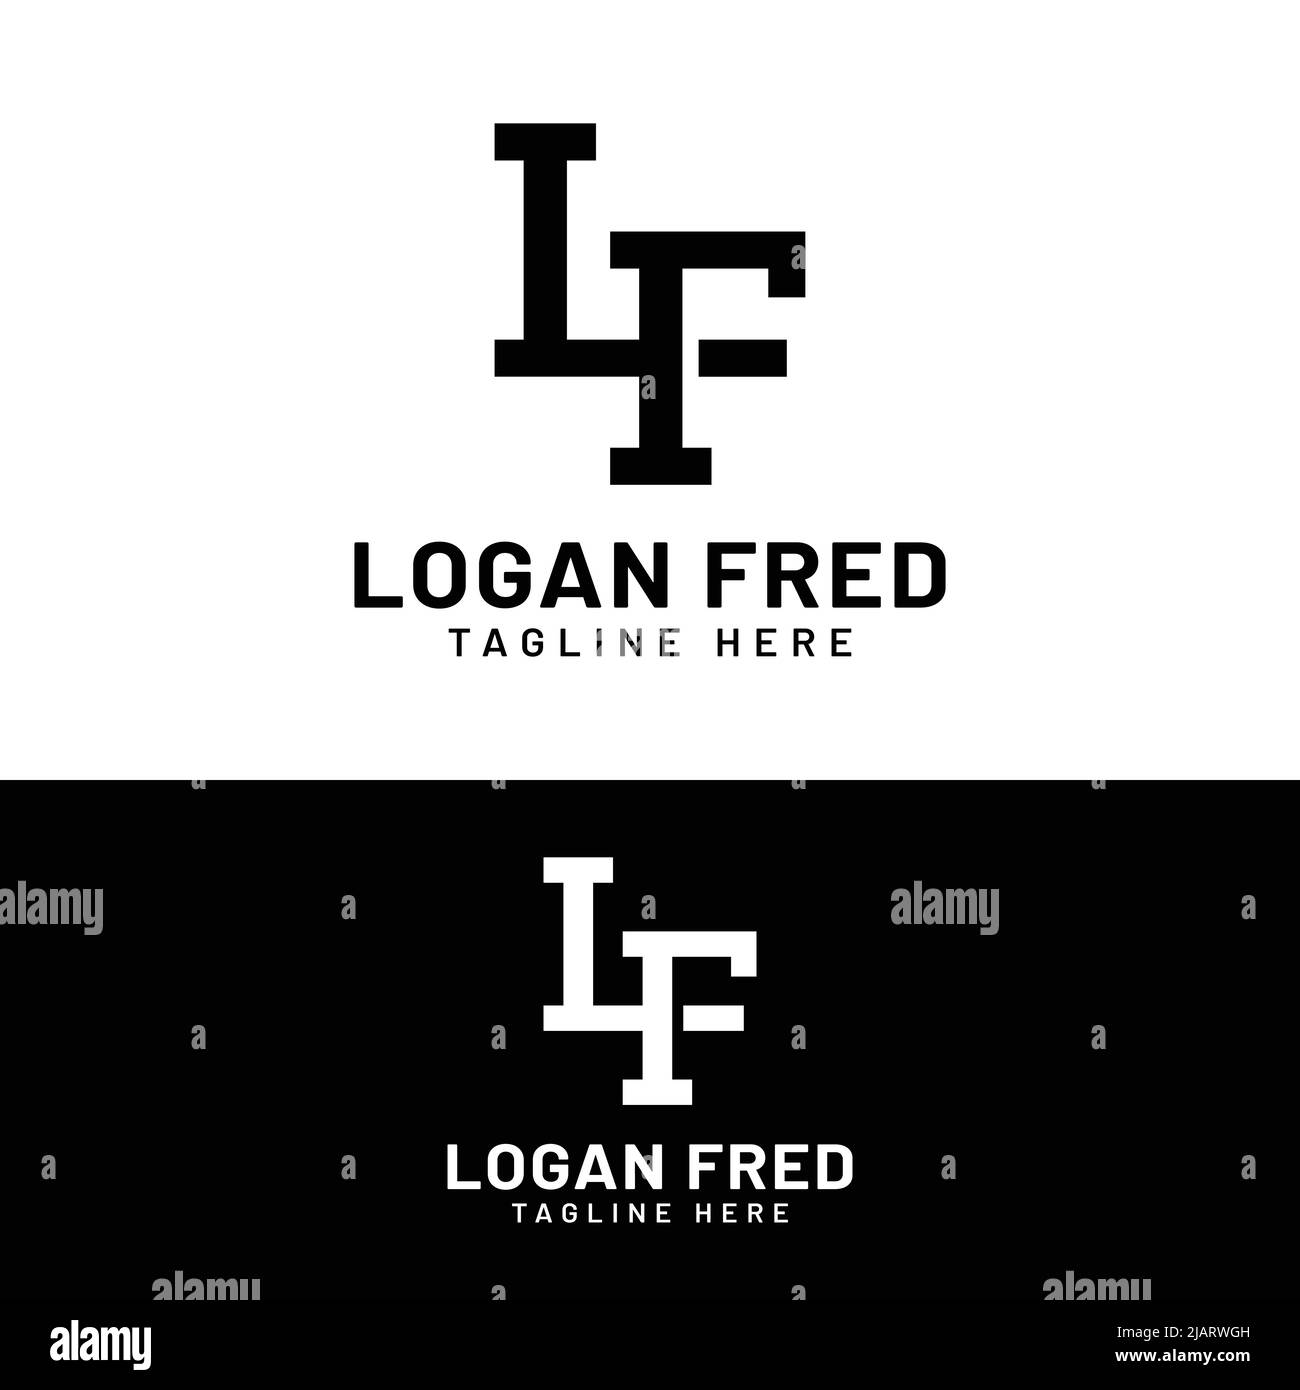 L F LF FL Letter Monogram Initial Logo Design Template. Suitable for General Sports Fitness Construction Finance Company Business Corporate Shop Appar Stock Vector